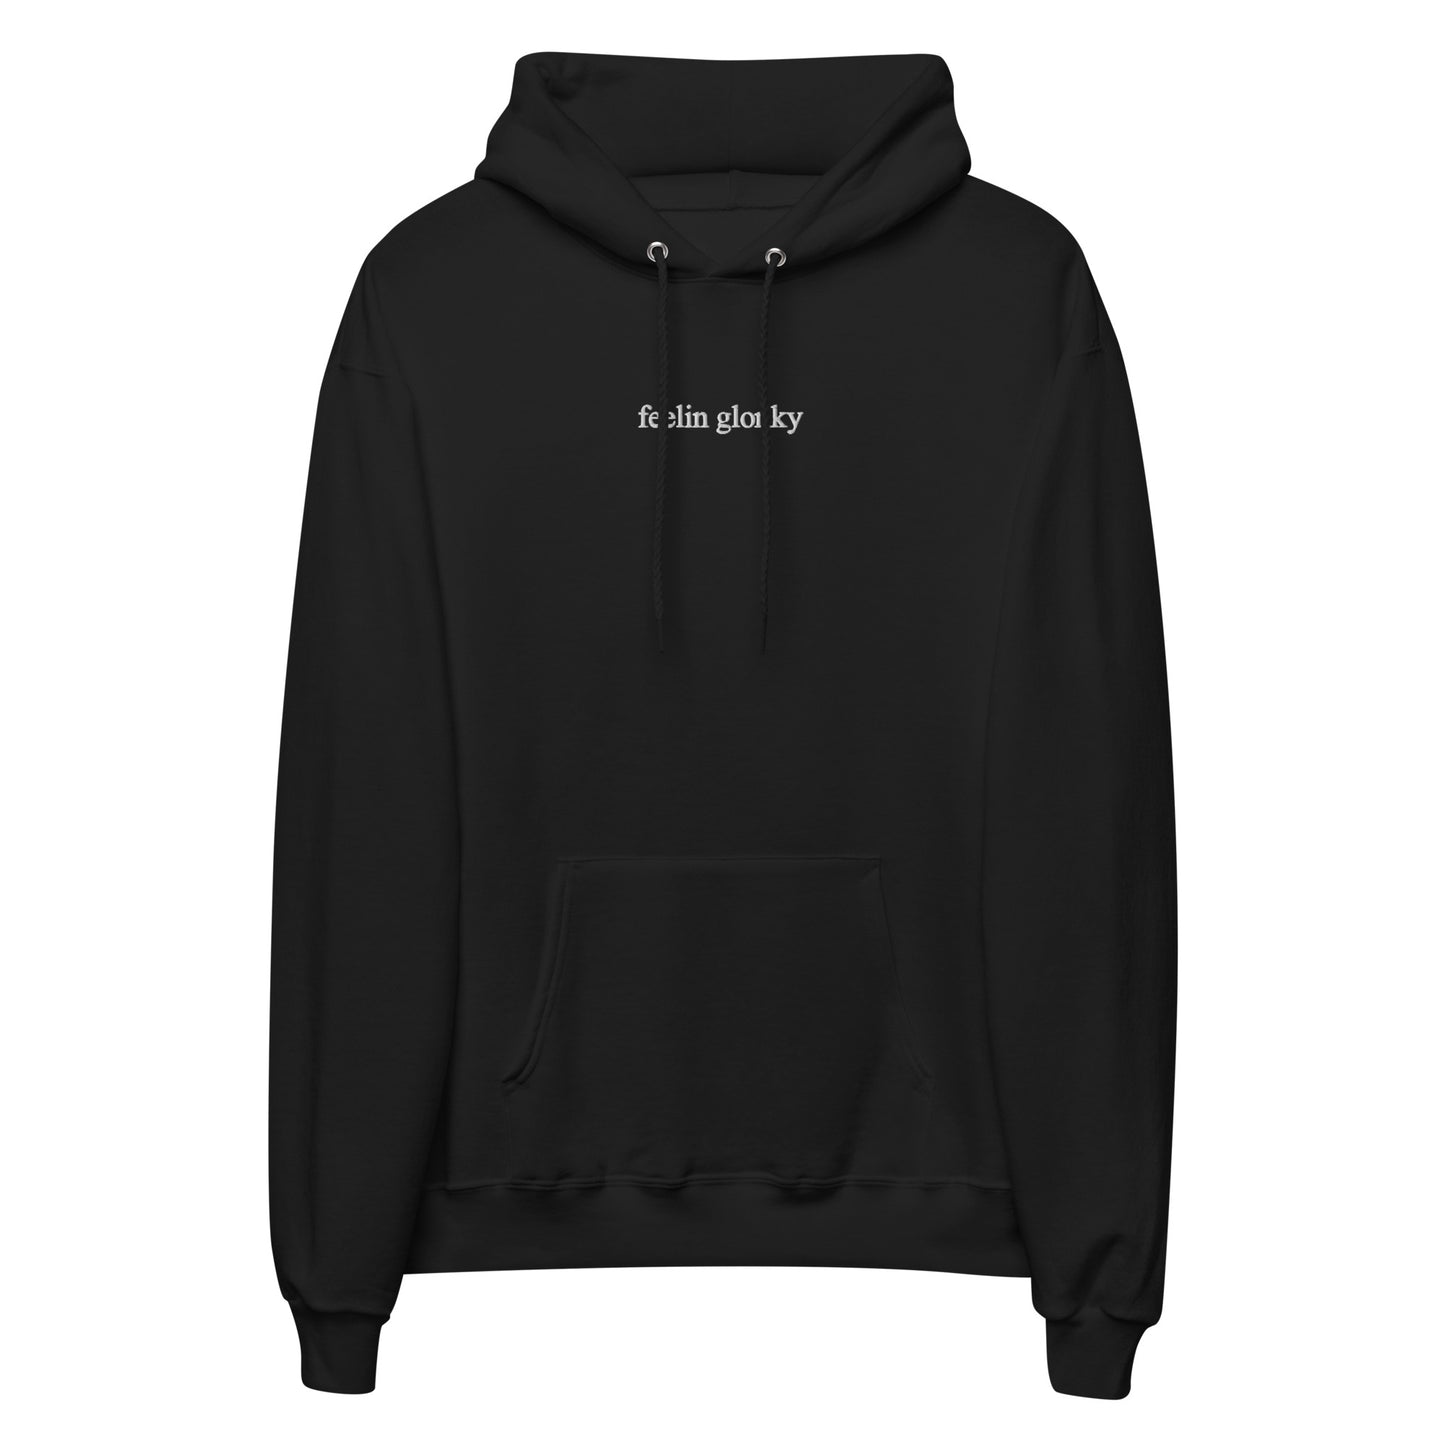 feelin glonky hoodie (black & white text)